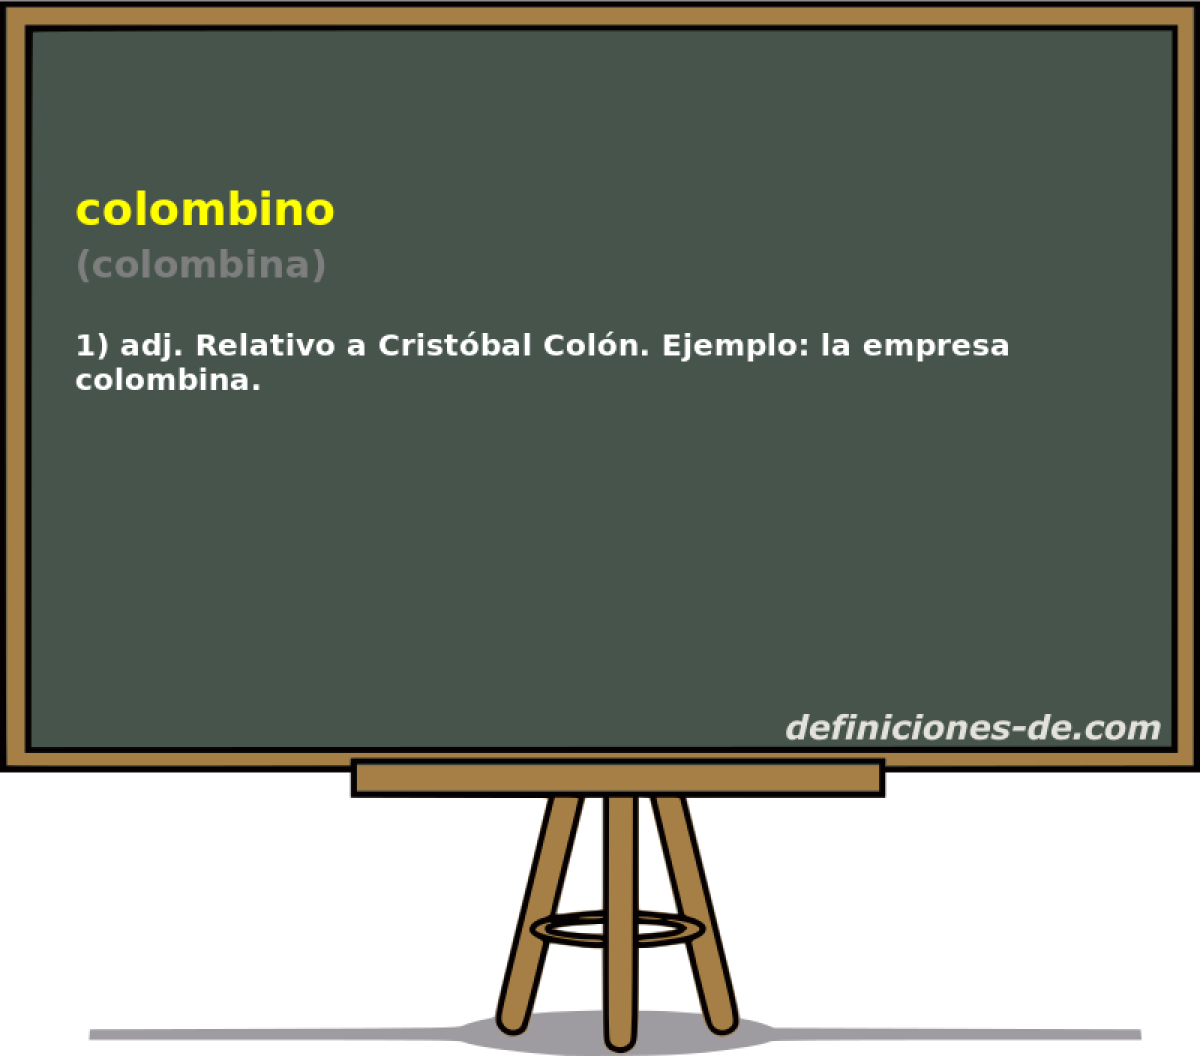 colombino (colombina)